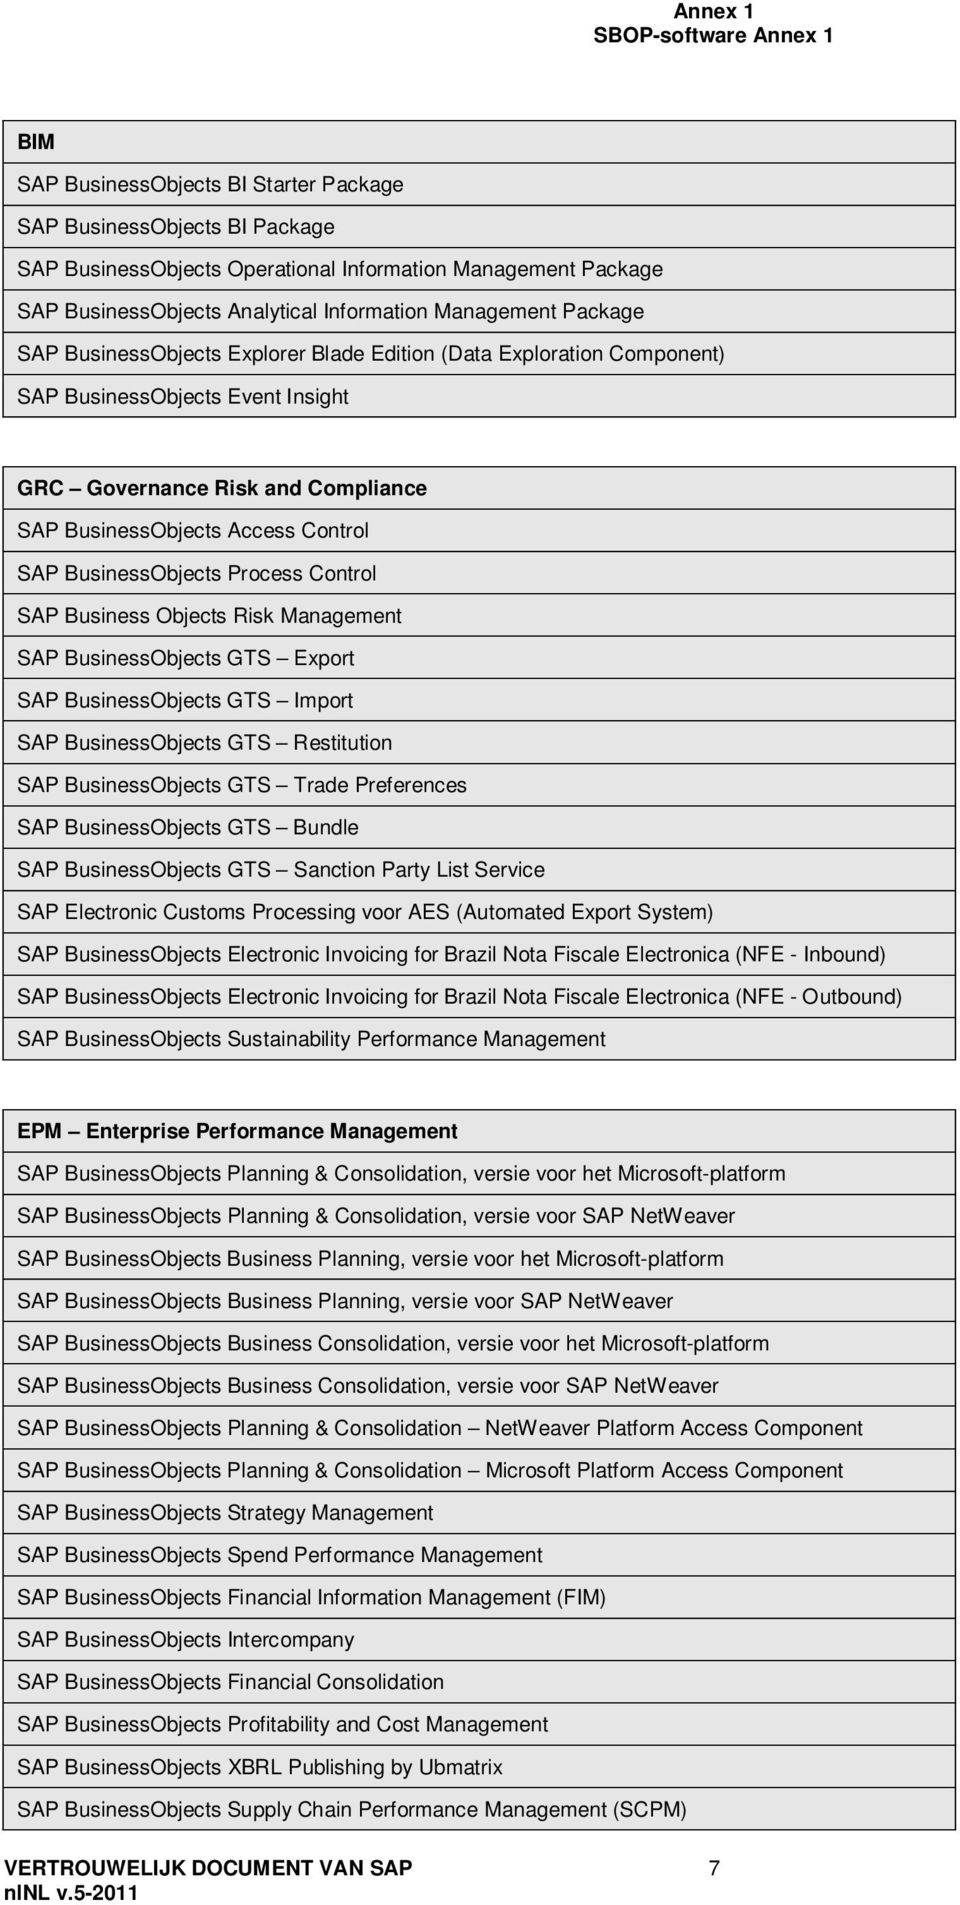 Control SAP BusinessObjects Process Control SAP Business Objects Risk Management SAP BusinessObjects GTS Export SAP BusinessObjects GTS Import SAP BusinessObjects GTS Restitution SAP BusinessObjects